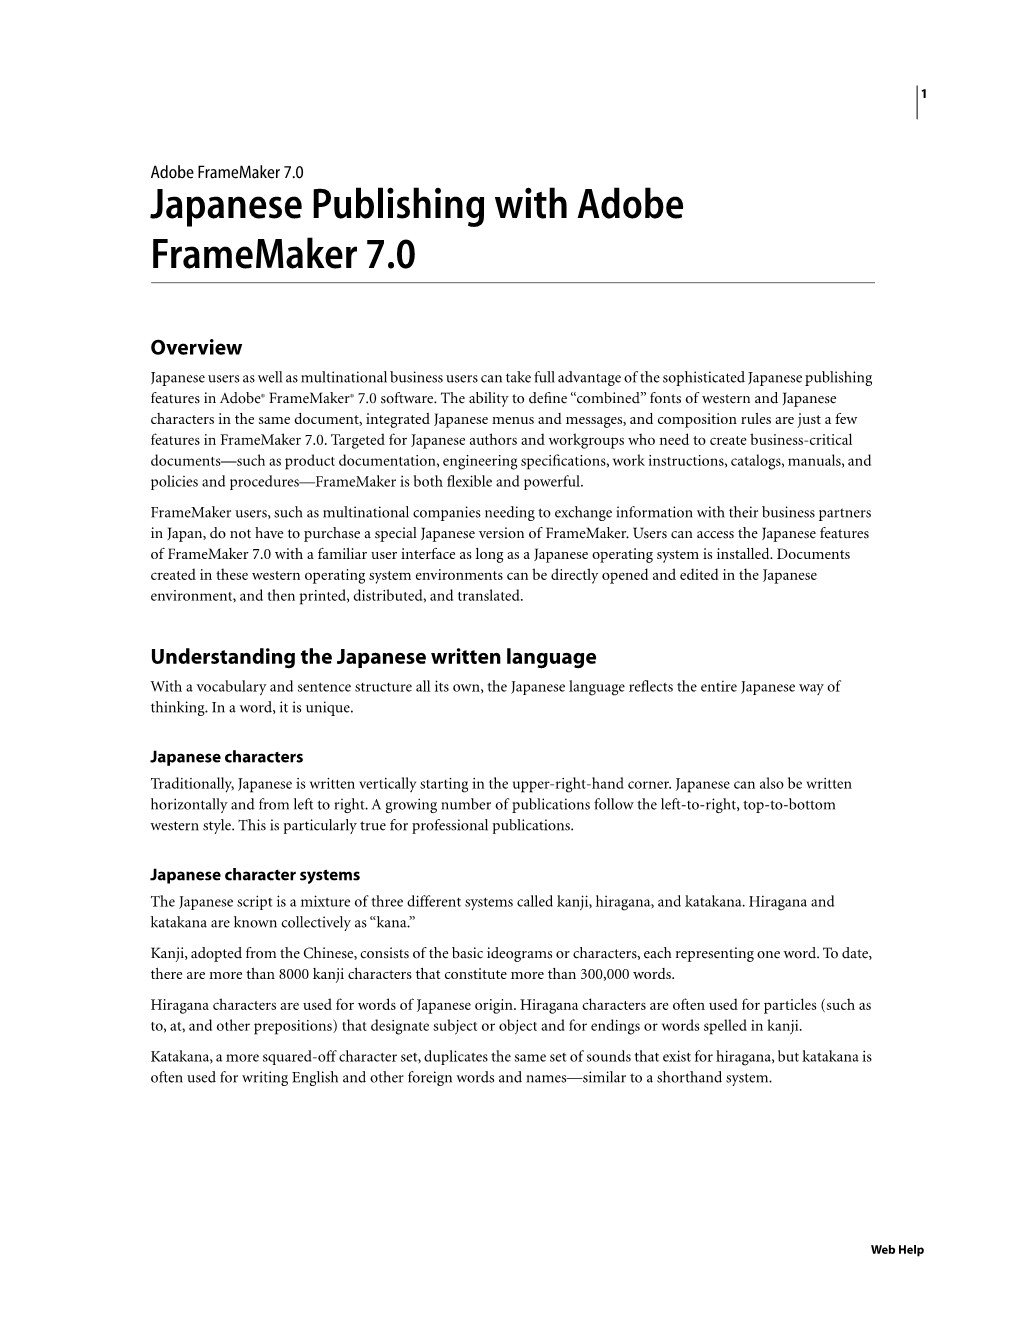 Japanese Publishing with Adobe Framemaker 7.0